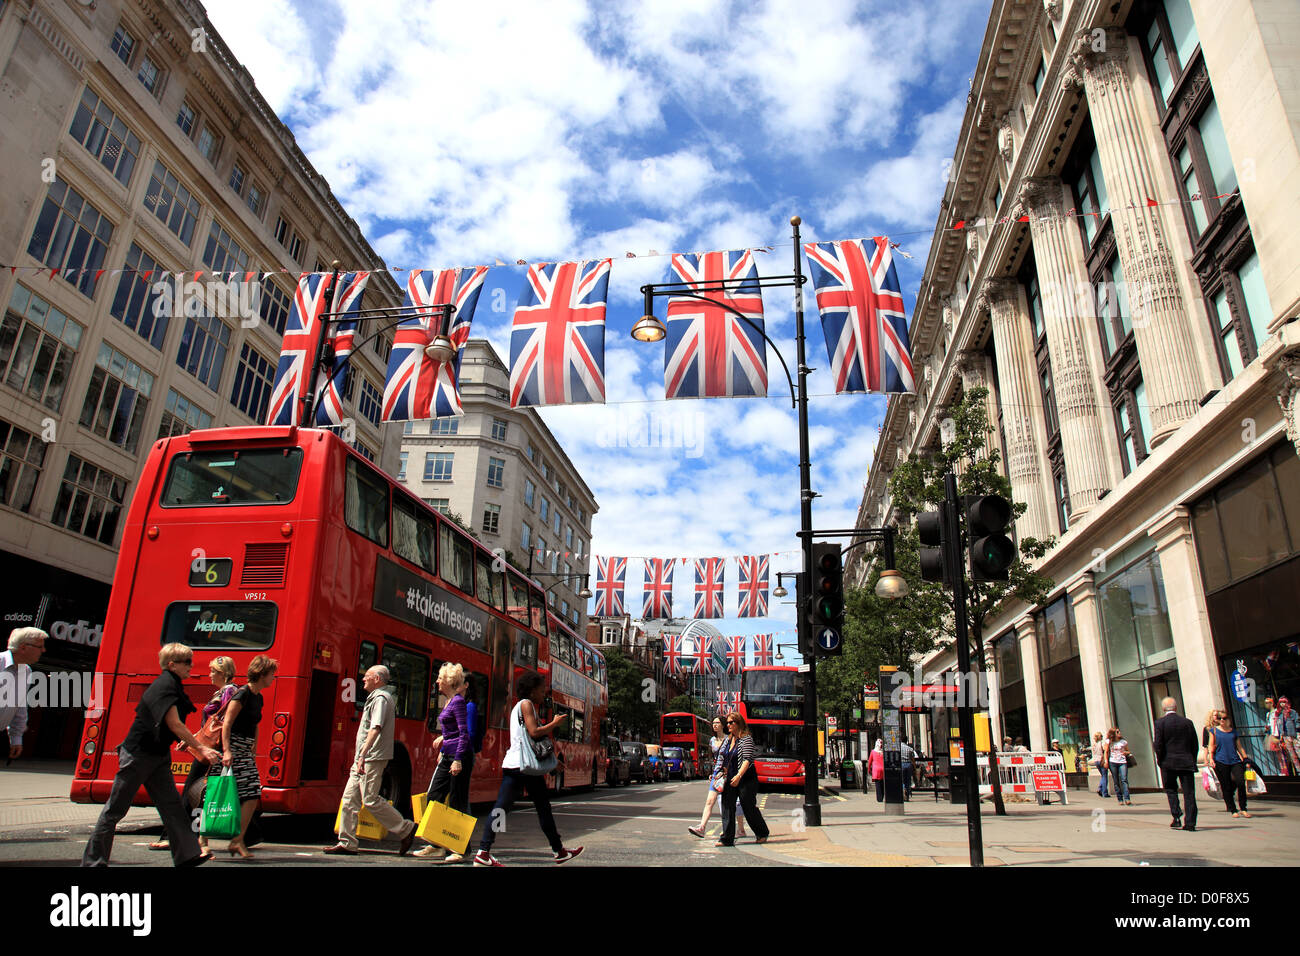 Oxford Street, London England UK Banque D'Images